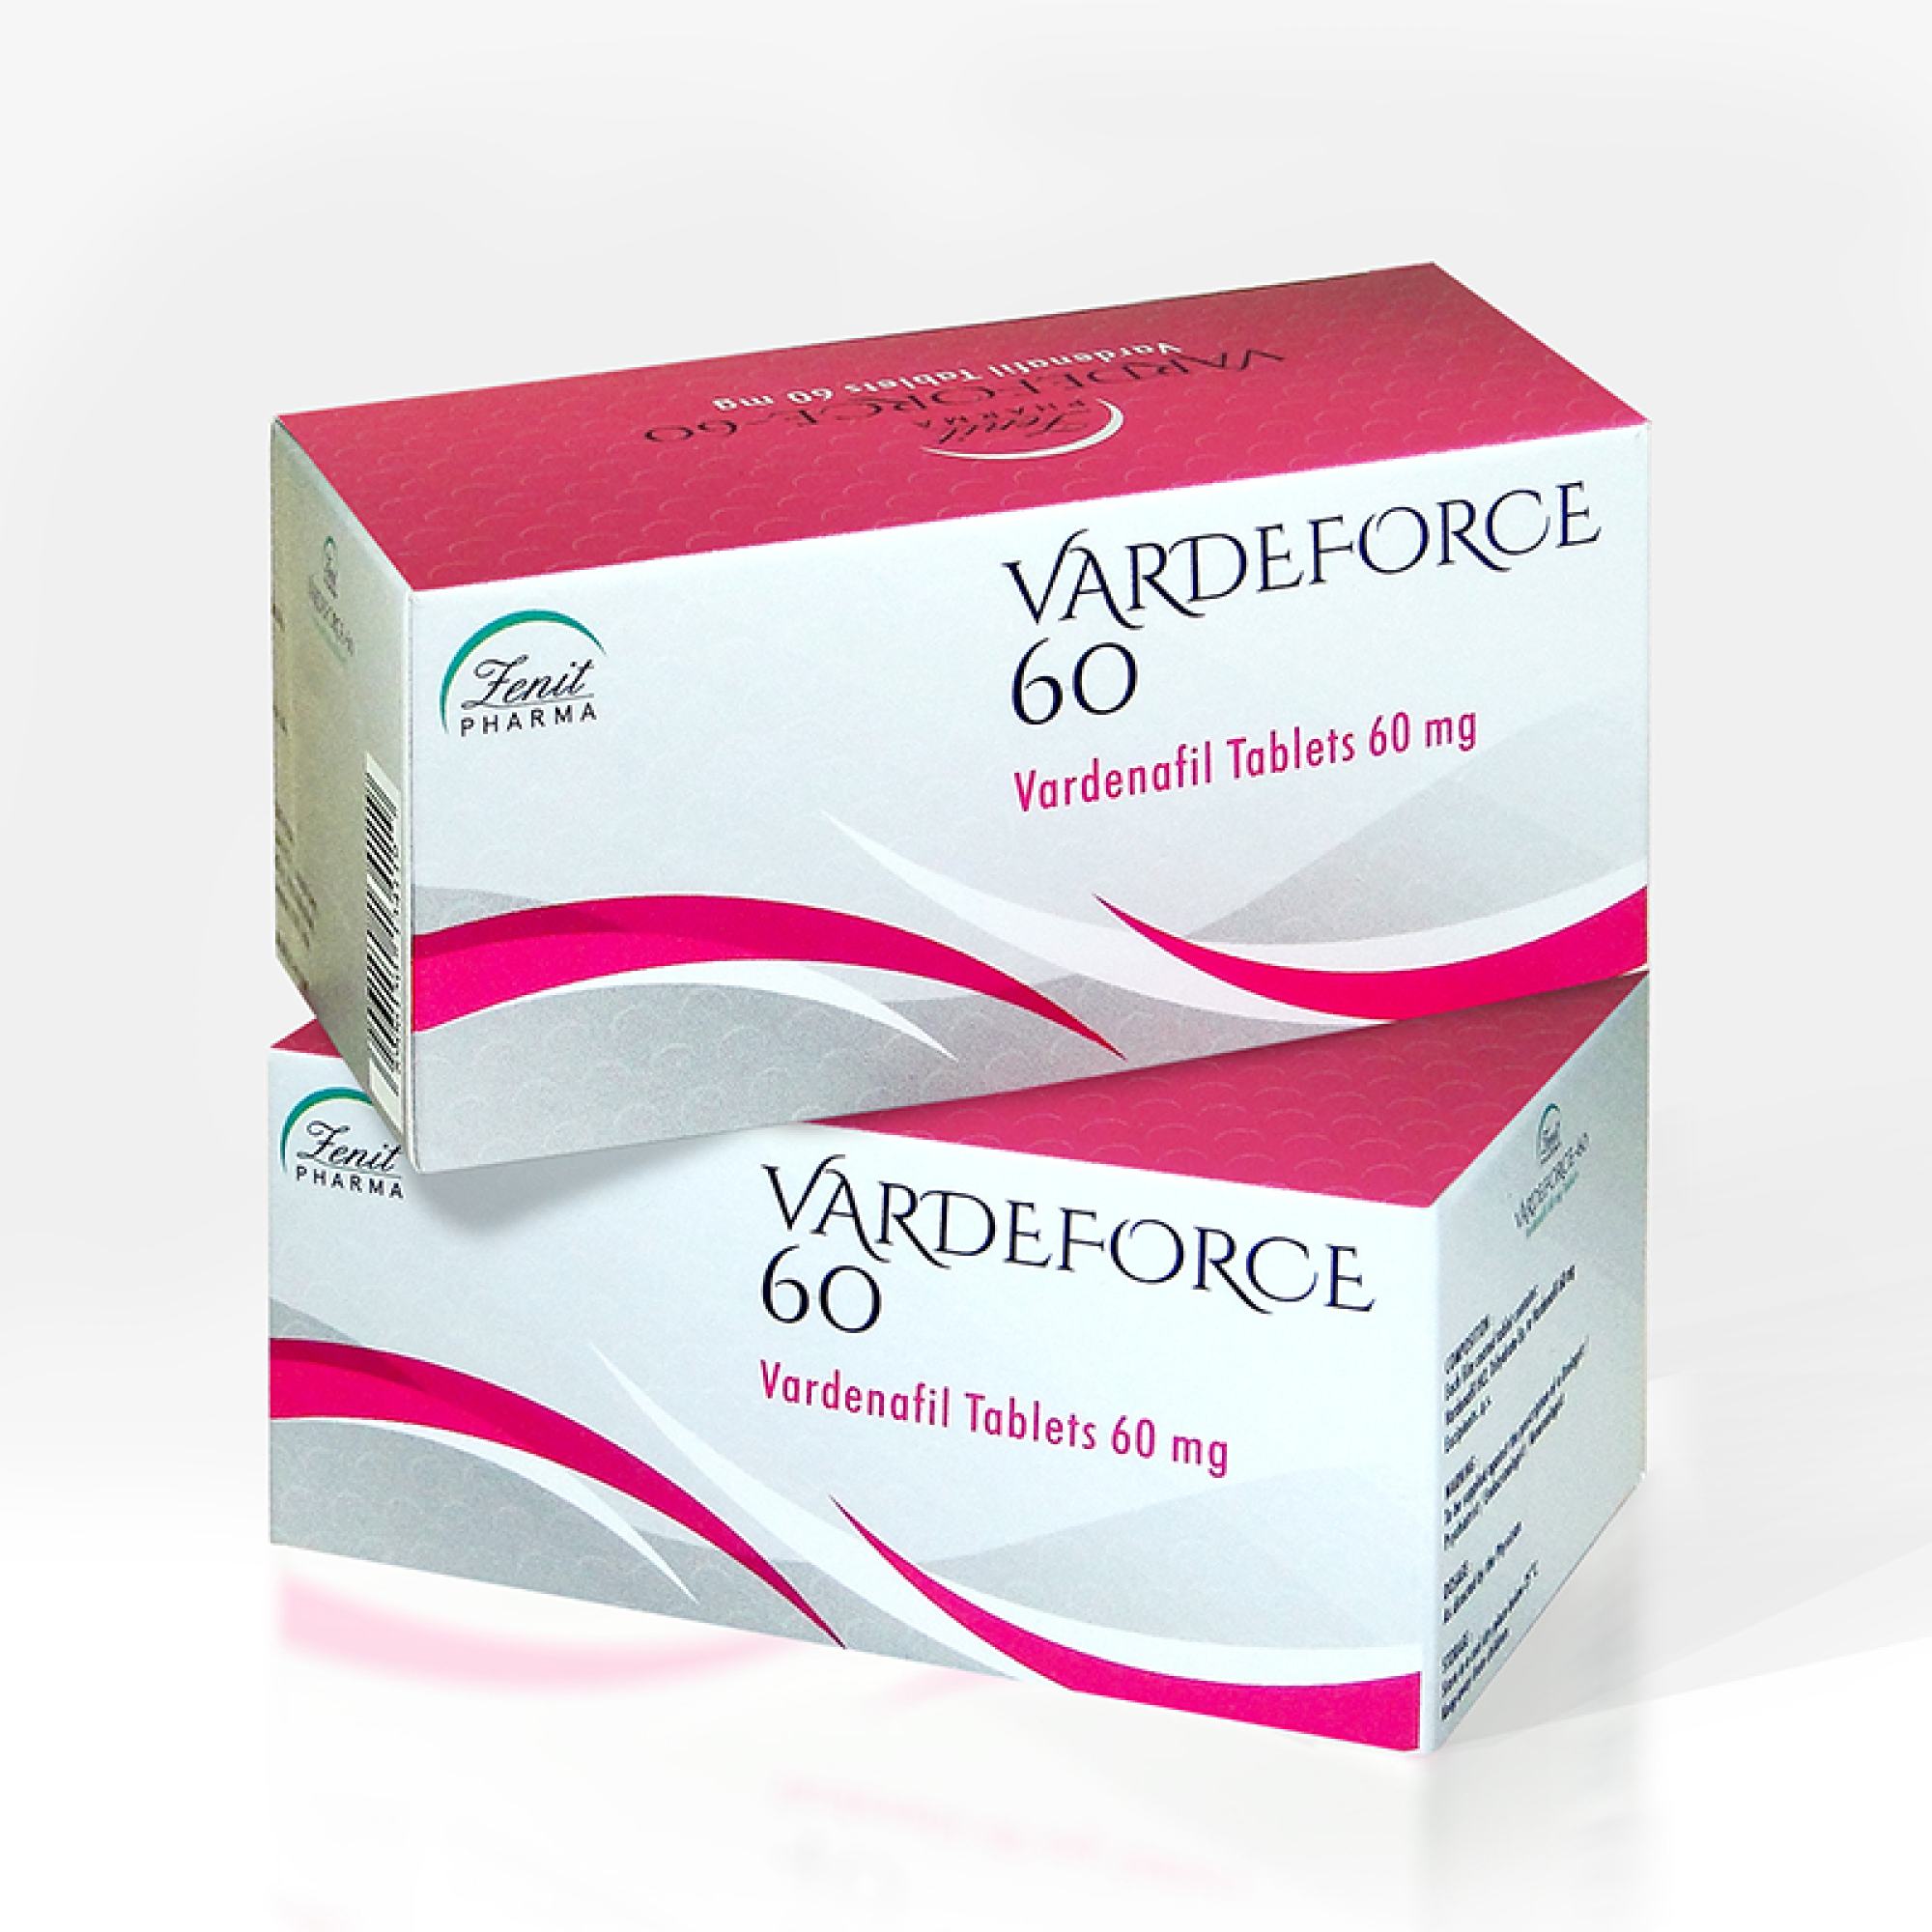 Vardeforce 60 mg -1